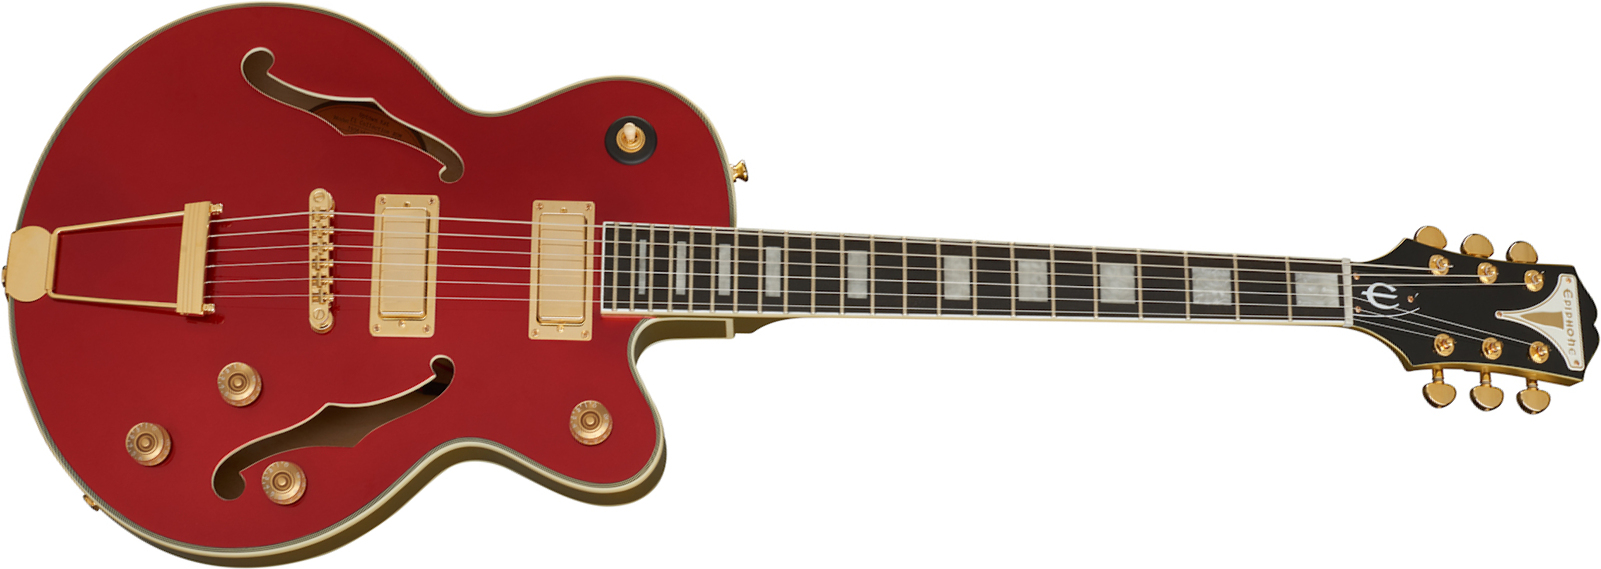 Epiphone Uptown Kat Es Original 2h Ht Eb - Ruby Red Metallic - Semi-hollow electric guitar - Main picture